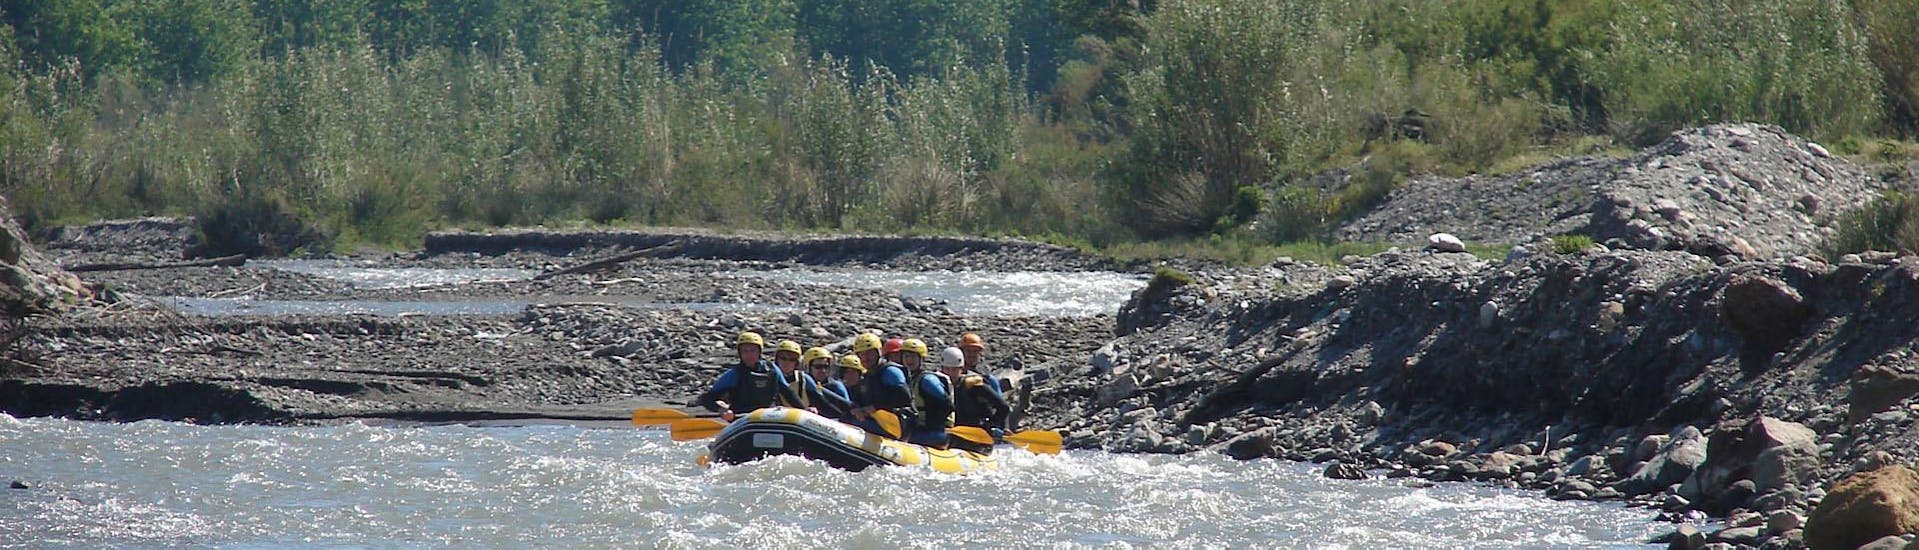 Rafting "Benamejí" - Río Genil .